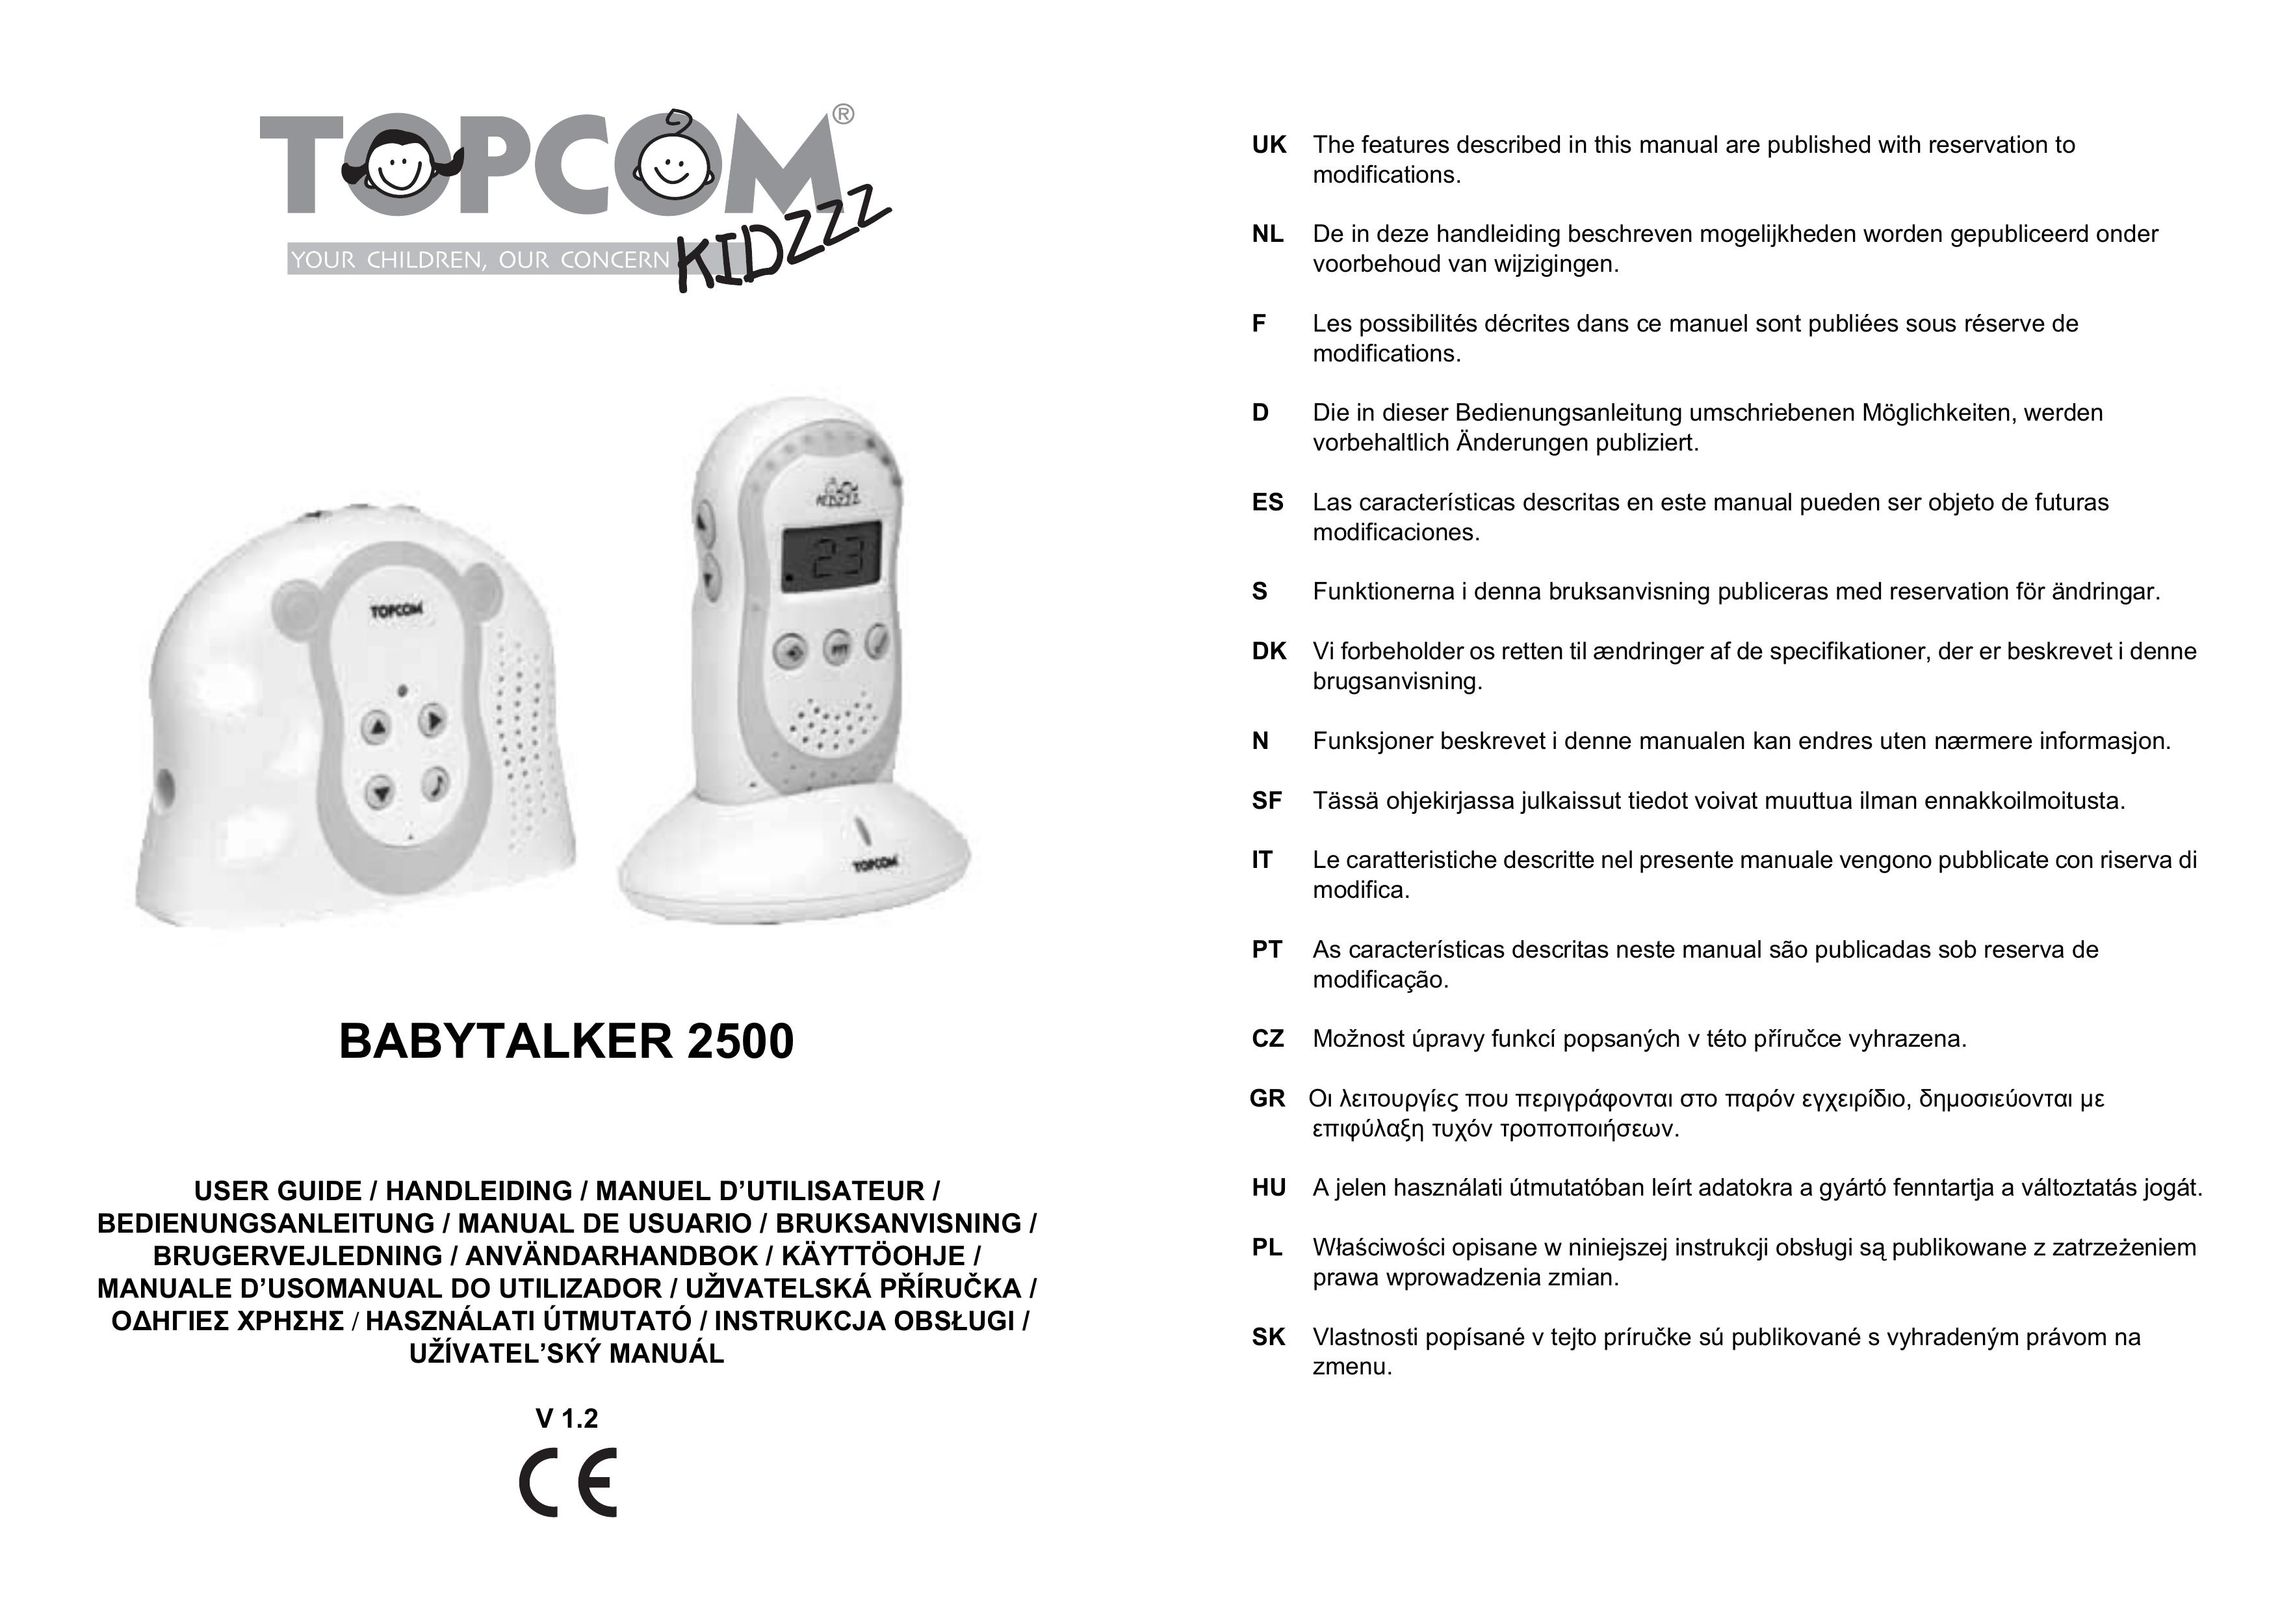 Topcom 2500 Baby Accessories User Manual